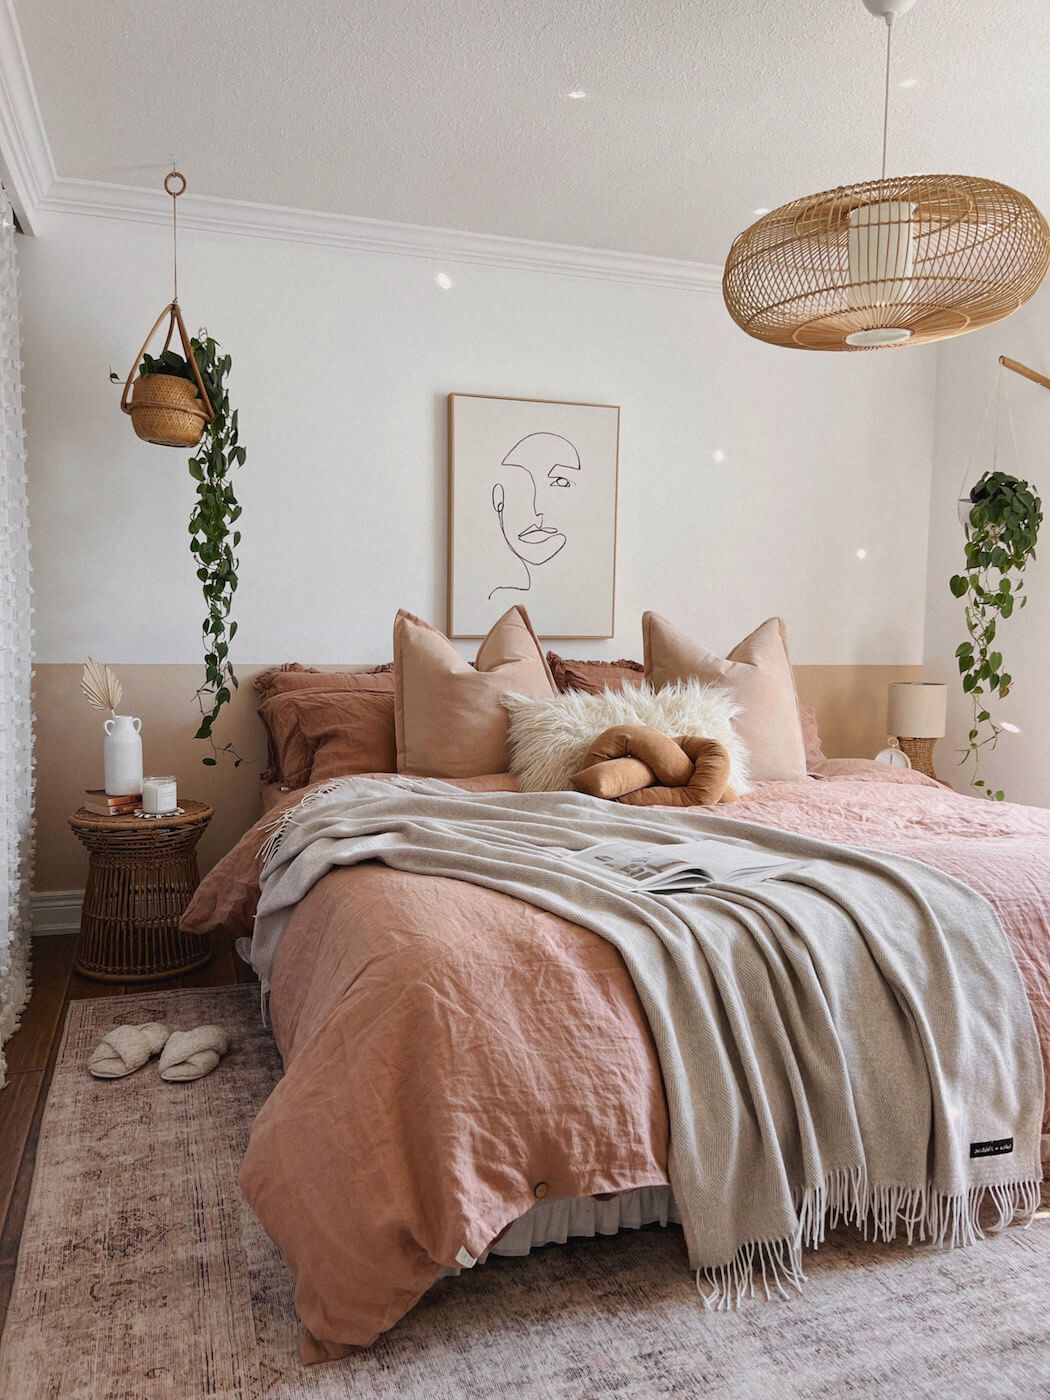 Simple Boho Bedroom - Inspire Chic Boho Bedroom Decor Ideas